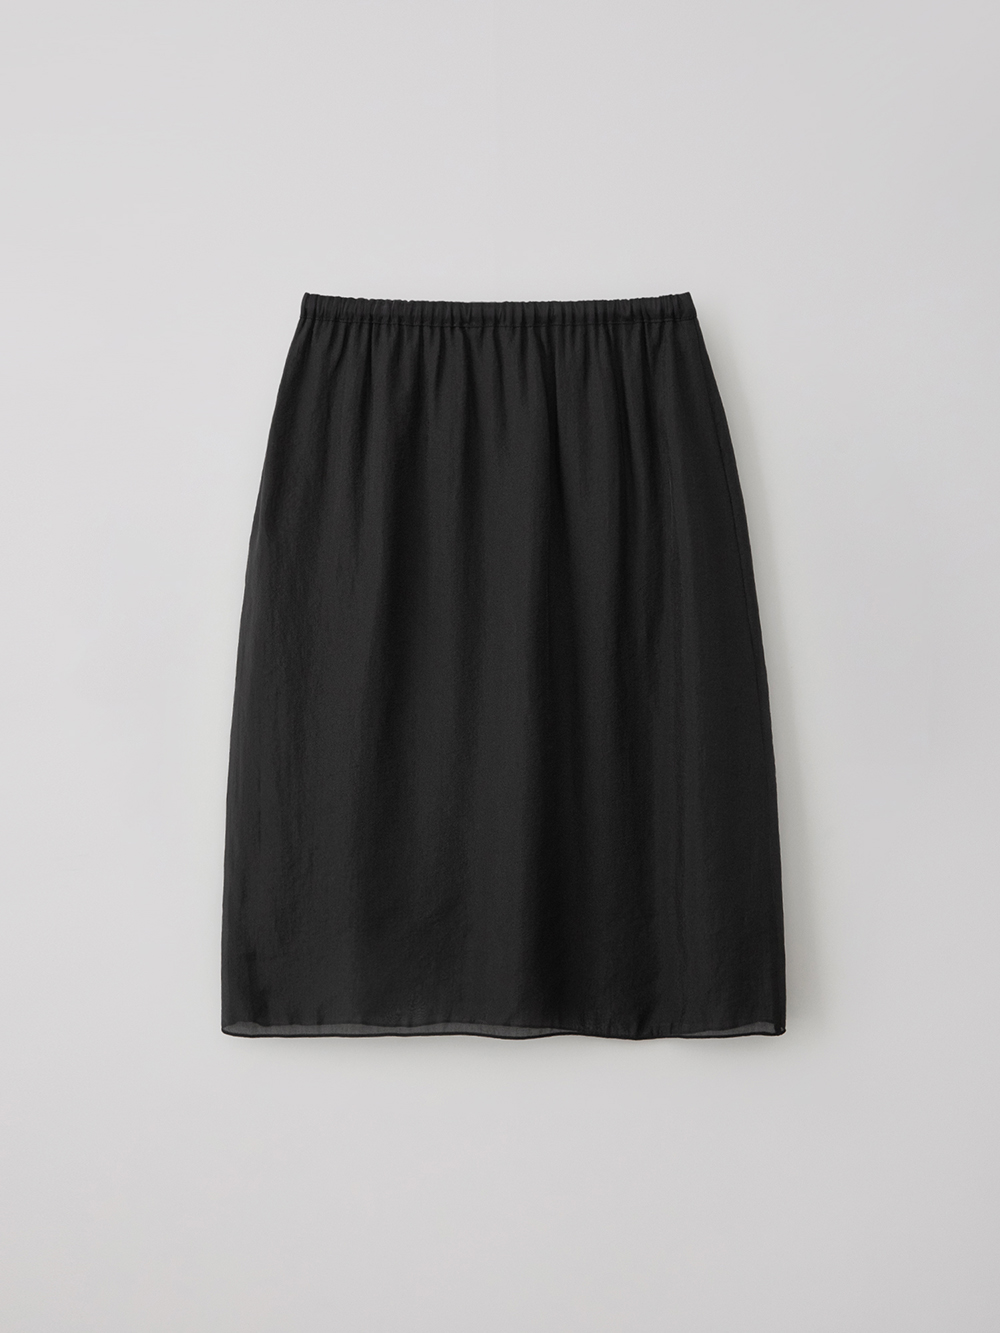 Reversible layered skirt (black)